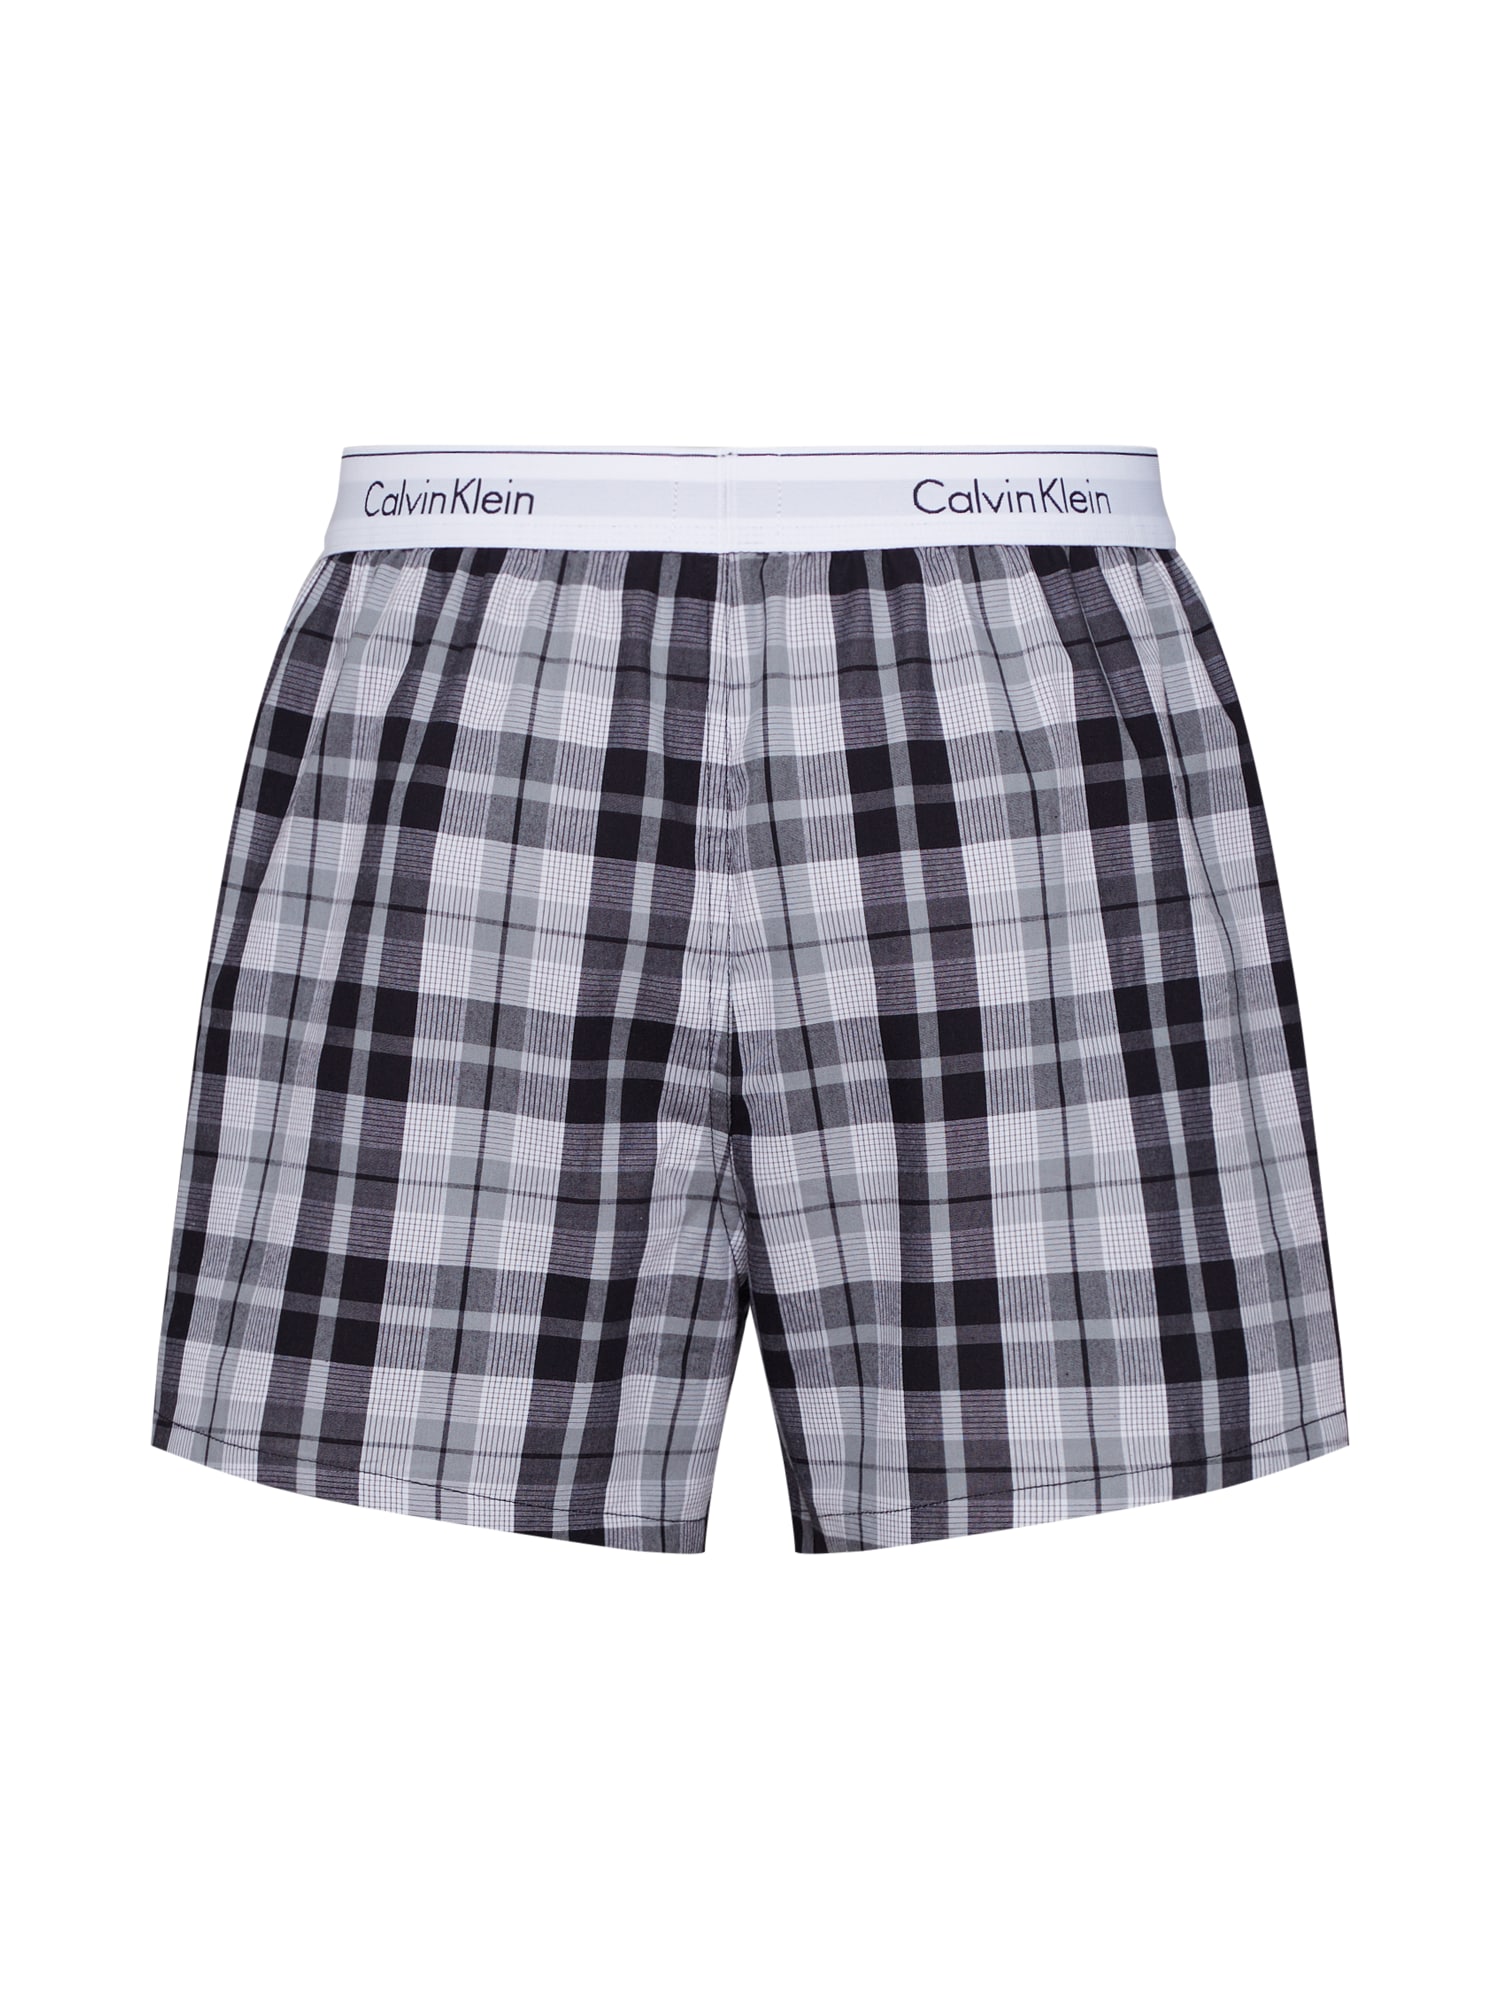 Calvin Klein Underwear Boxer shorts 'Modern Cotton Stretch'  mixed colours